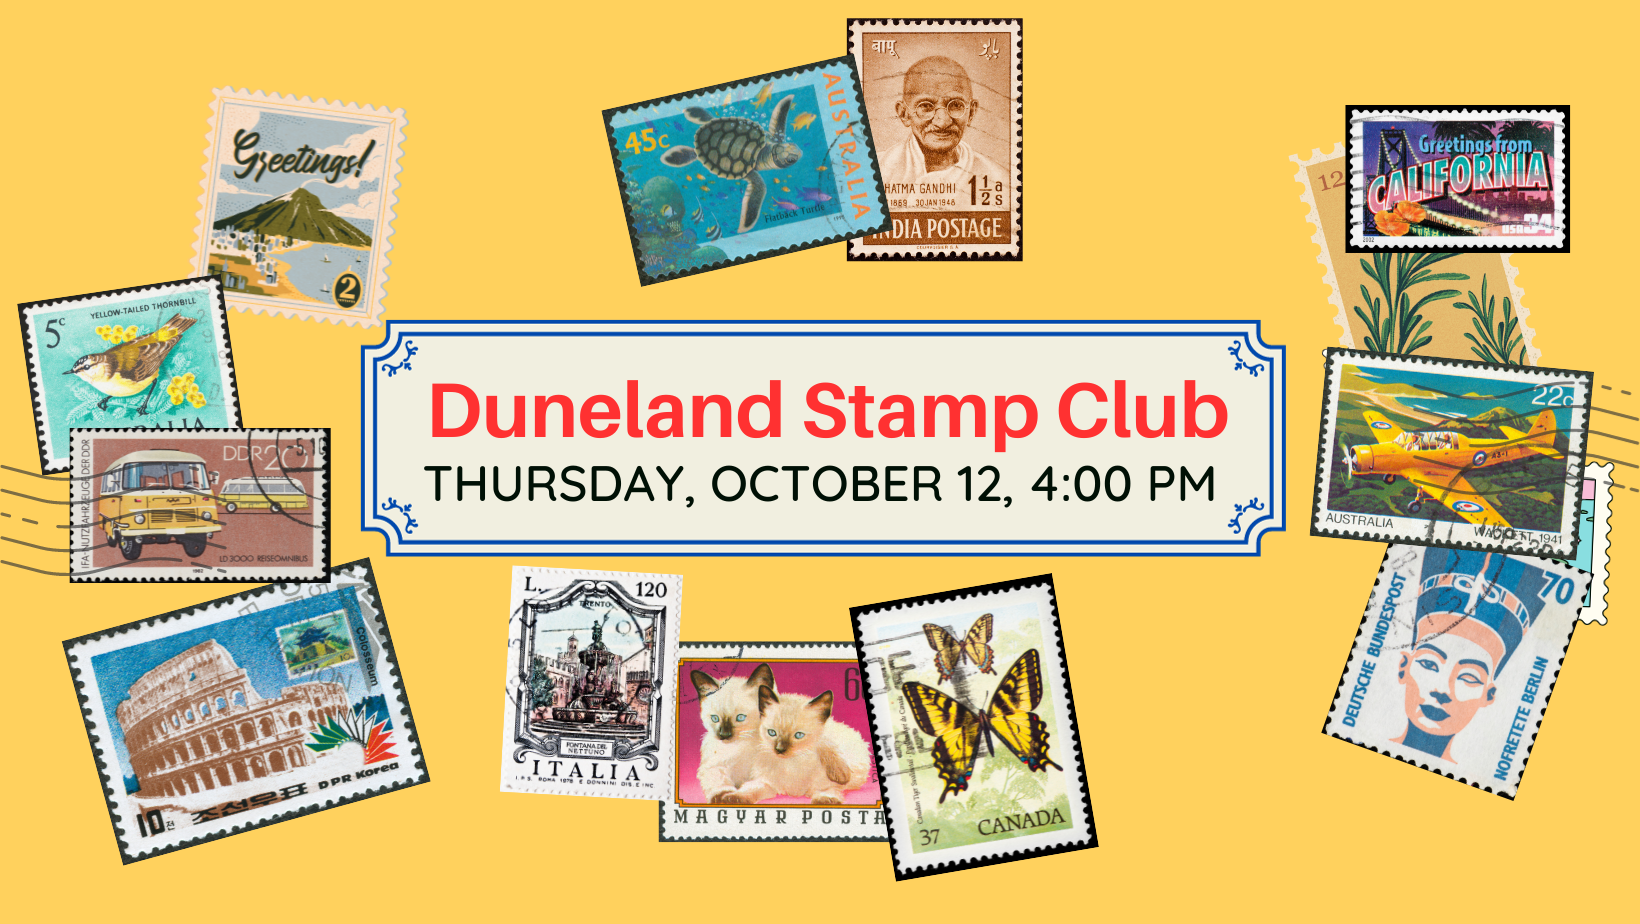 Duneland Stamp Club, Thursday, October 12, 4:00 pm